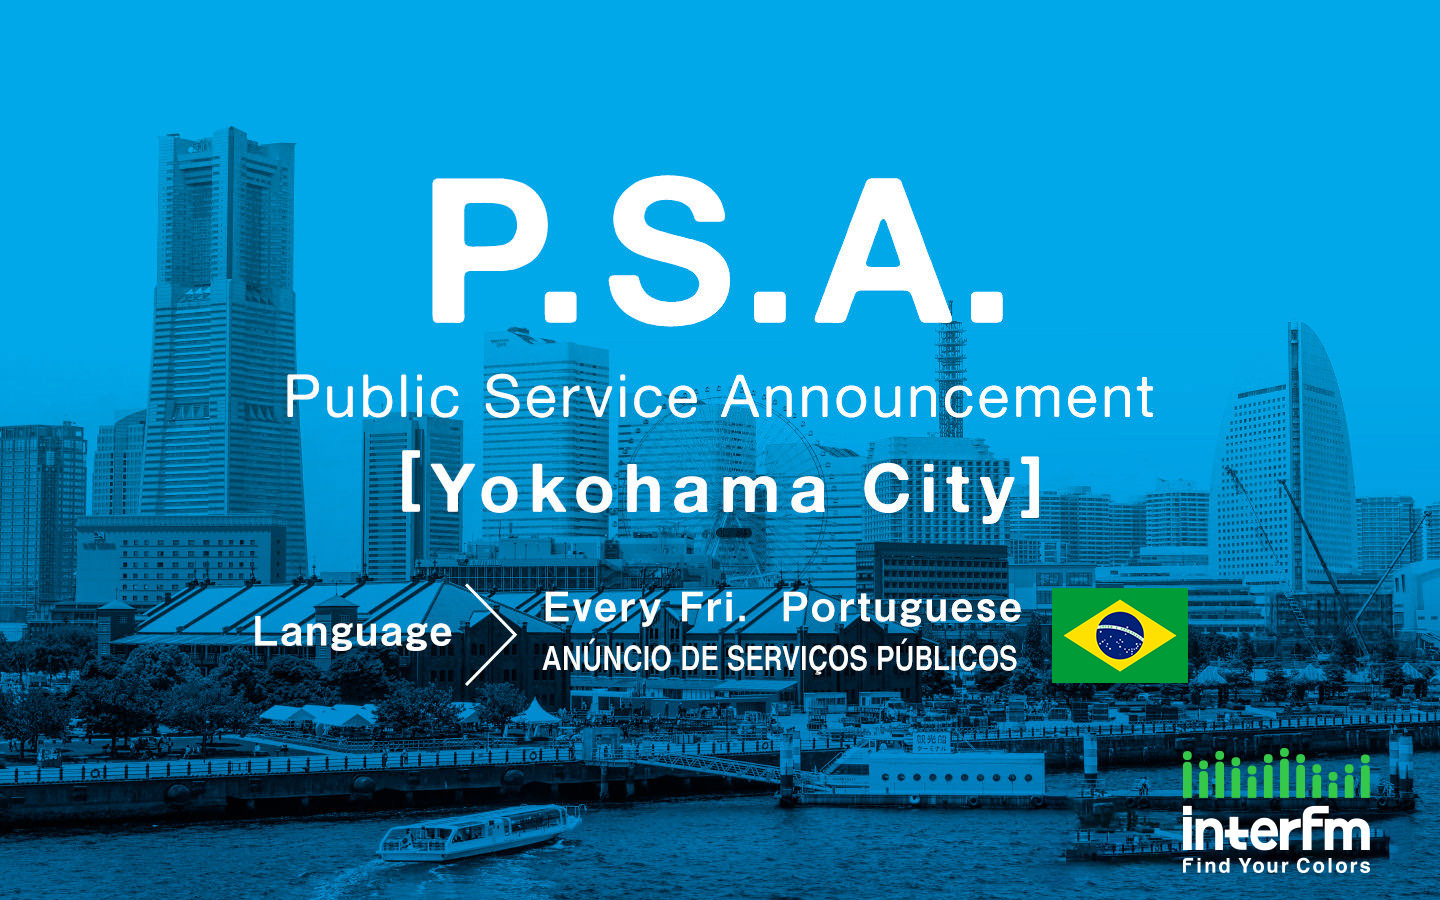 Public Service Announcement, Cidade de Yokohama (Português)